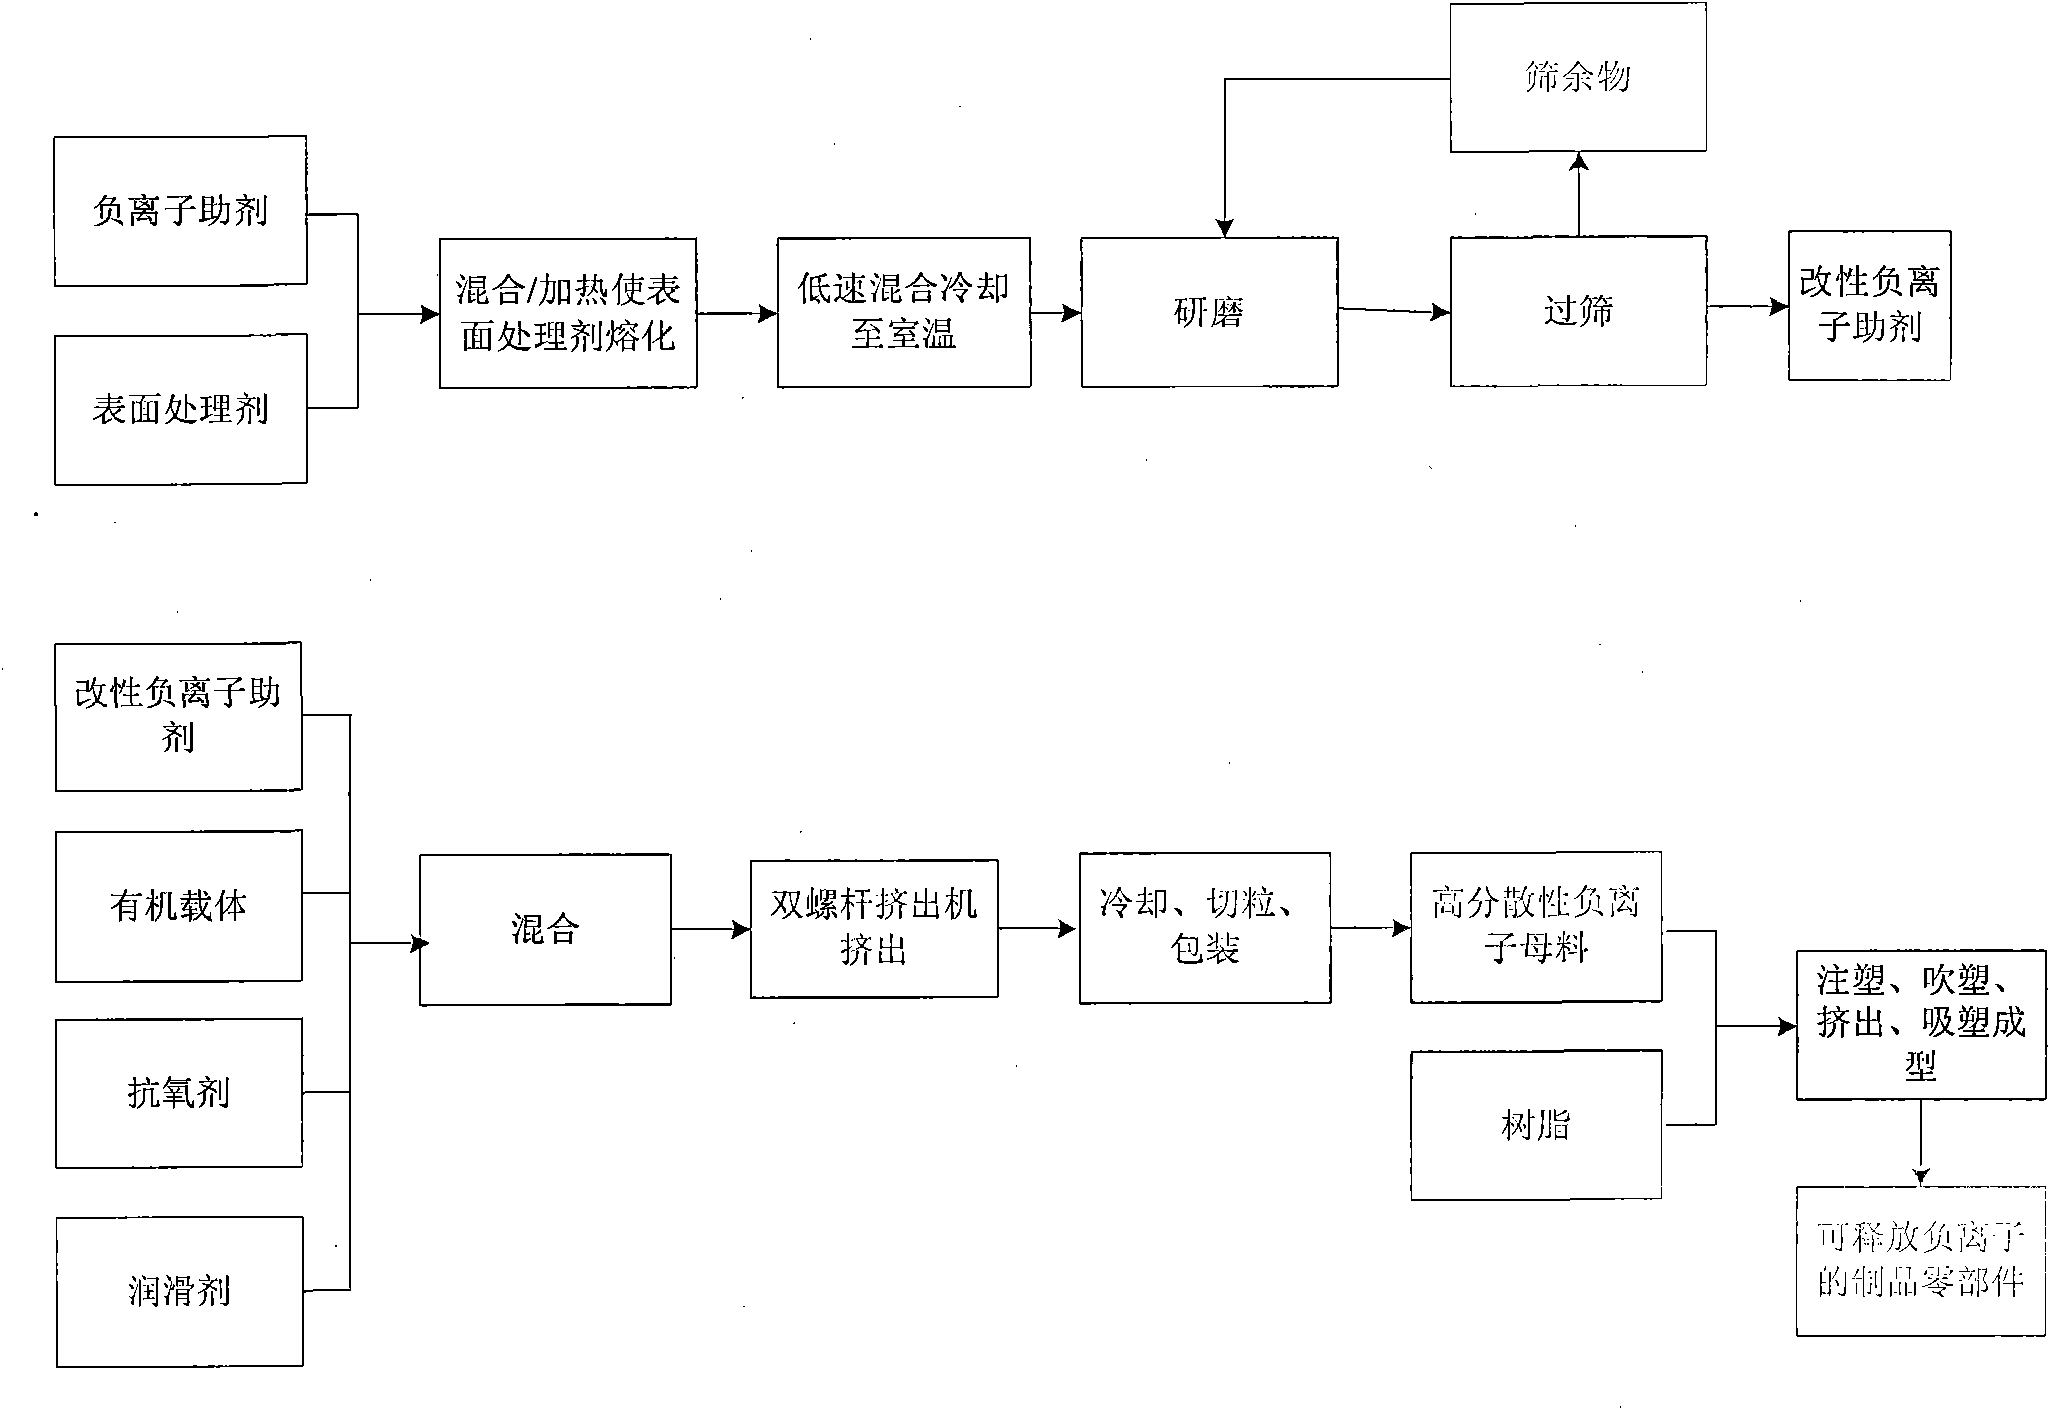 Preparation method of negative-ion master batch